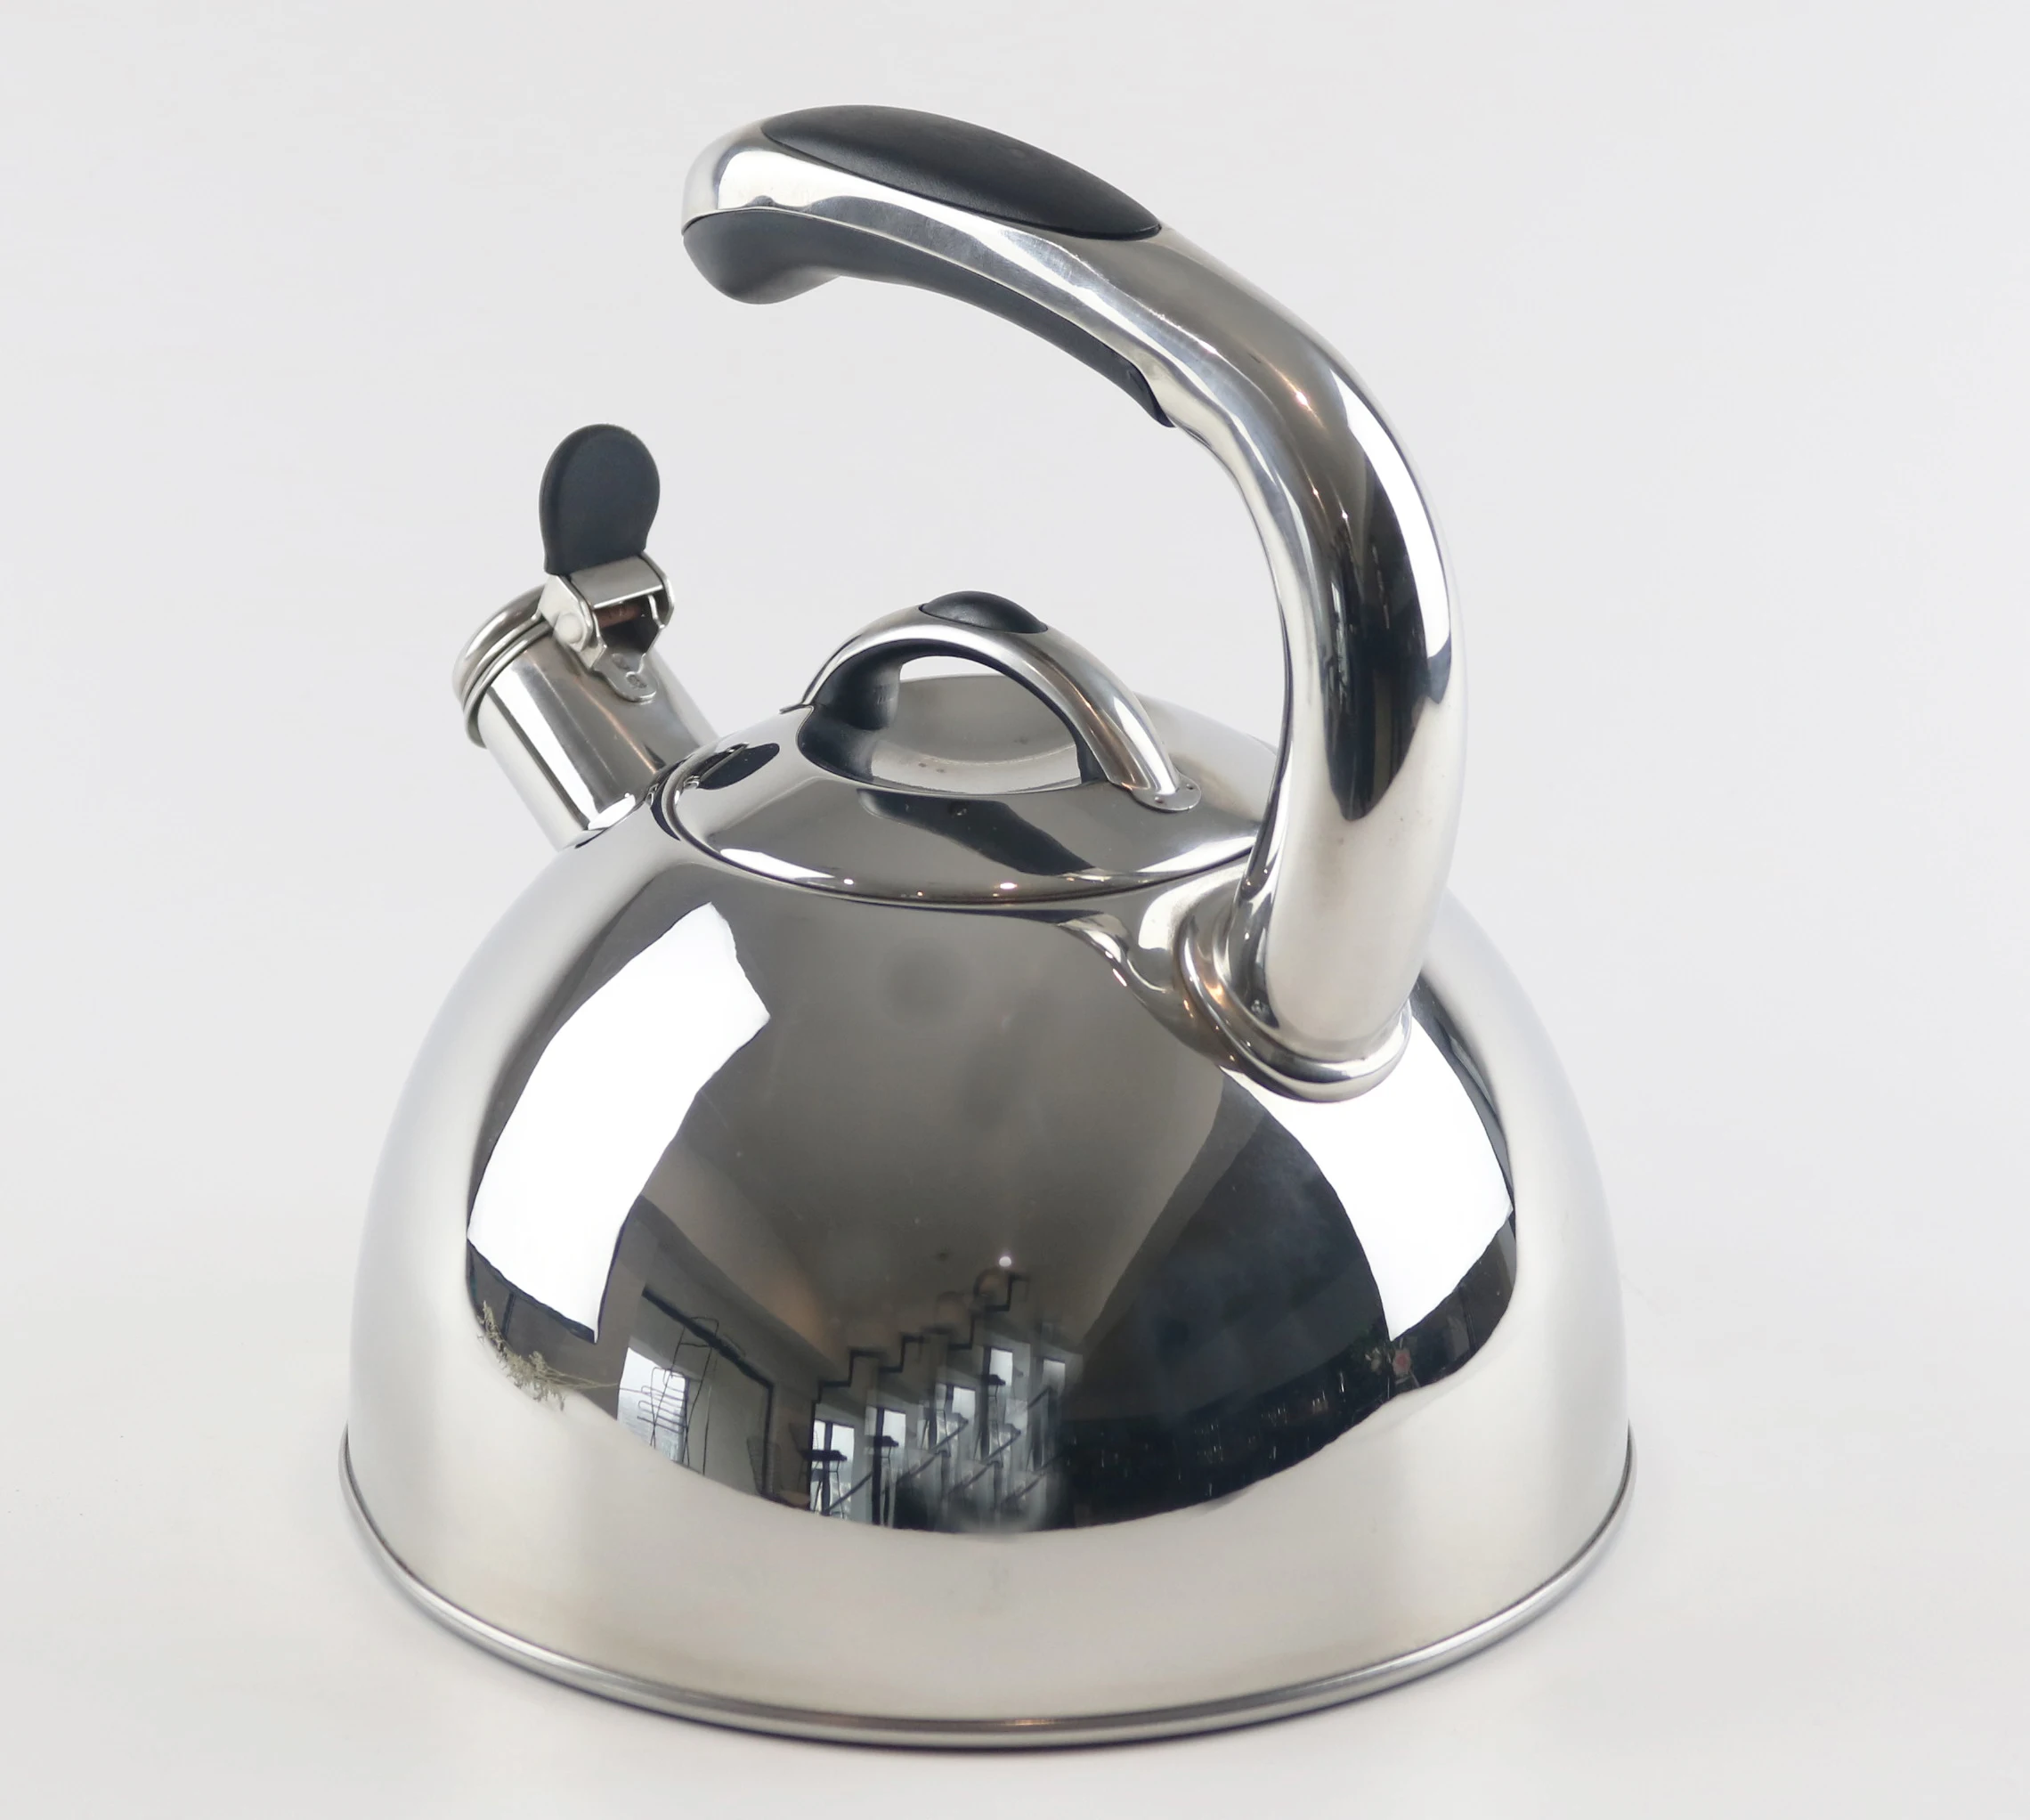 
Fashion stainless steel boiling tea pot kitchen utensil water boiler whistle water kettle 